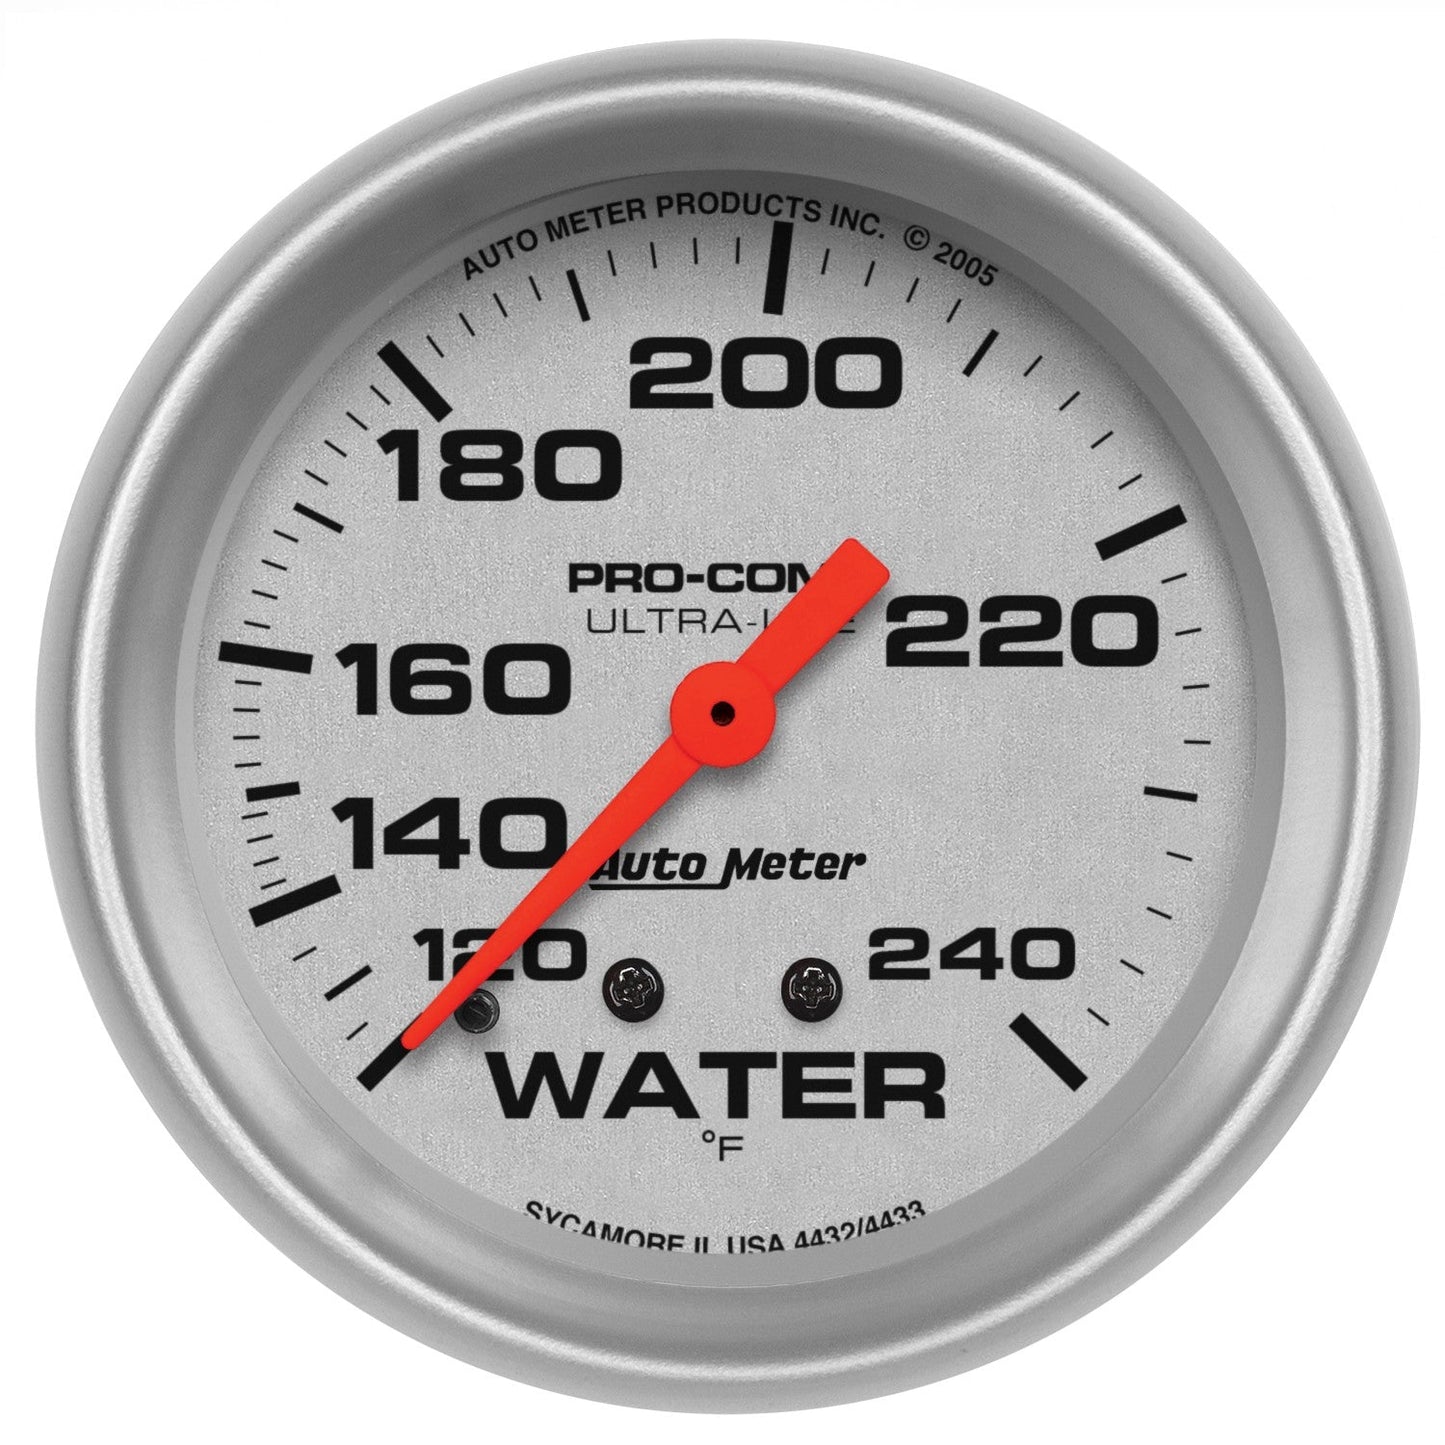 AutoMeter - 2-5/8" WATER TEMPERATURE, 120-240 °F, MECHANICAL, ULTRA-LITE (4433)